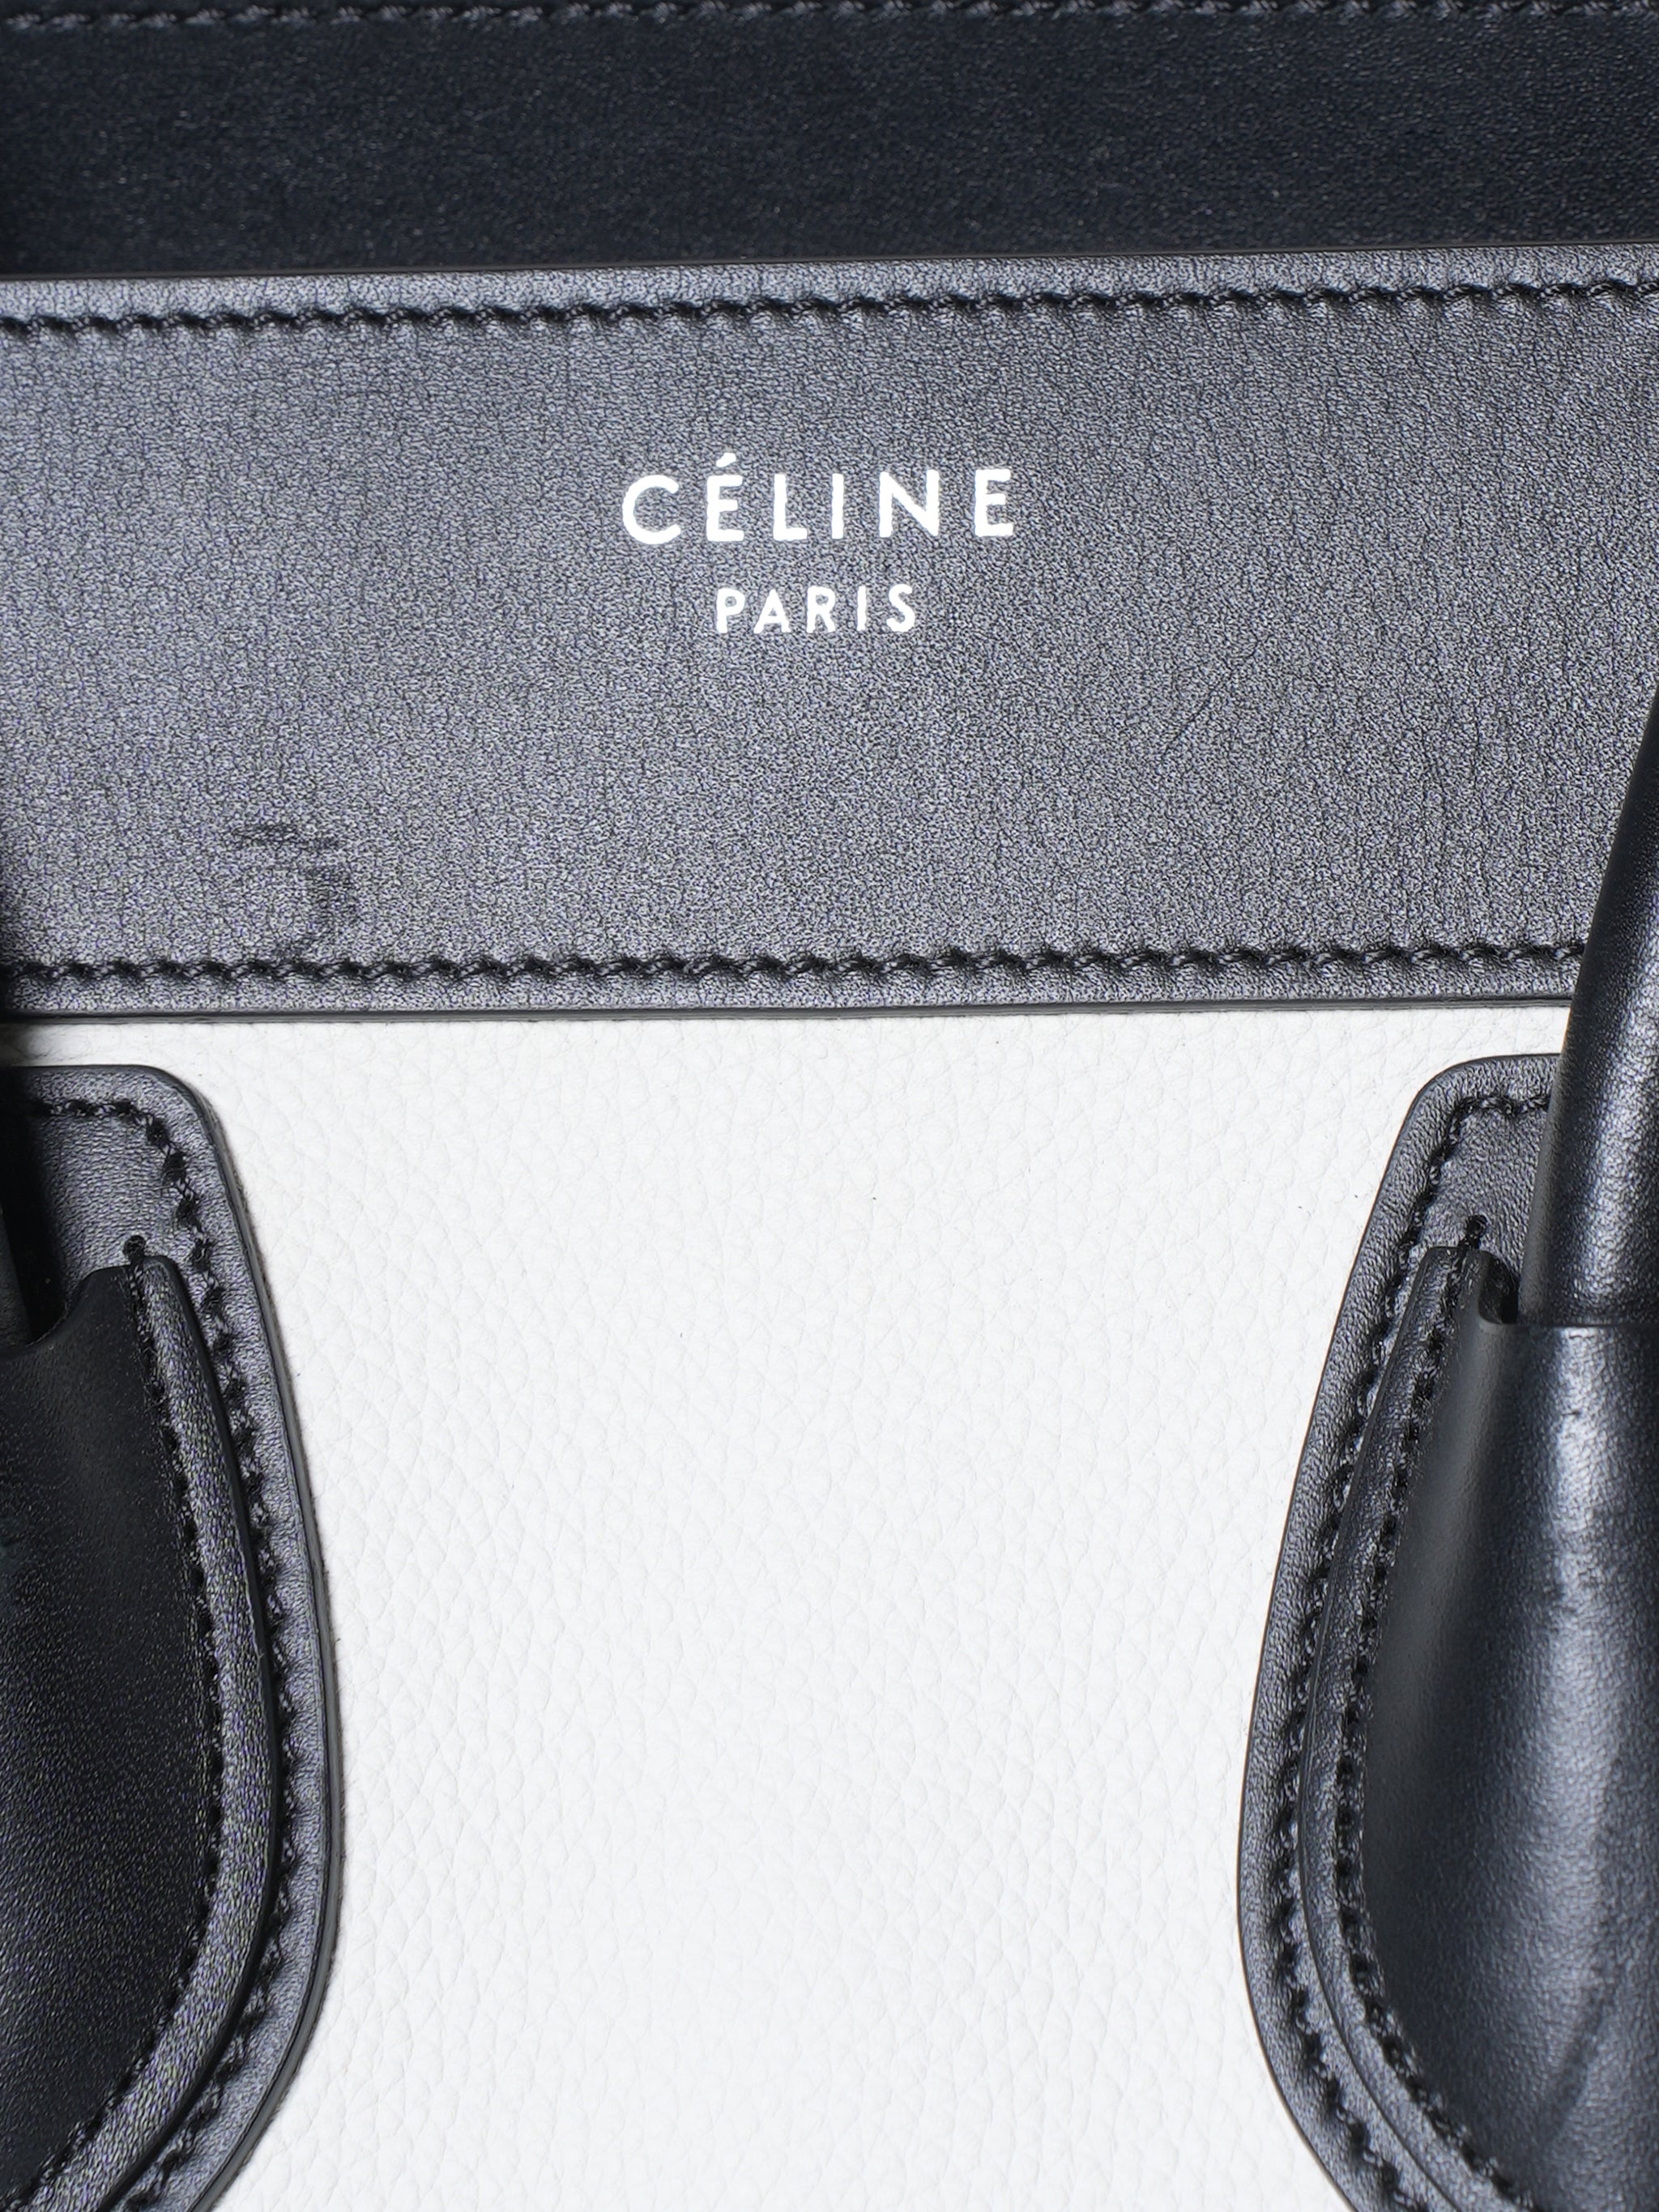 Celine Paris Luggage Bag